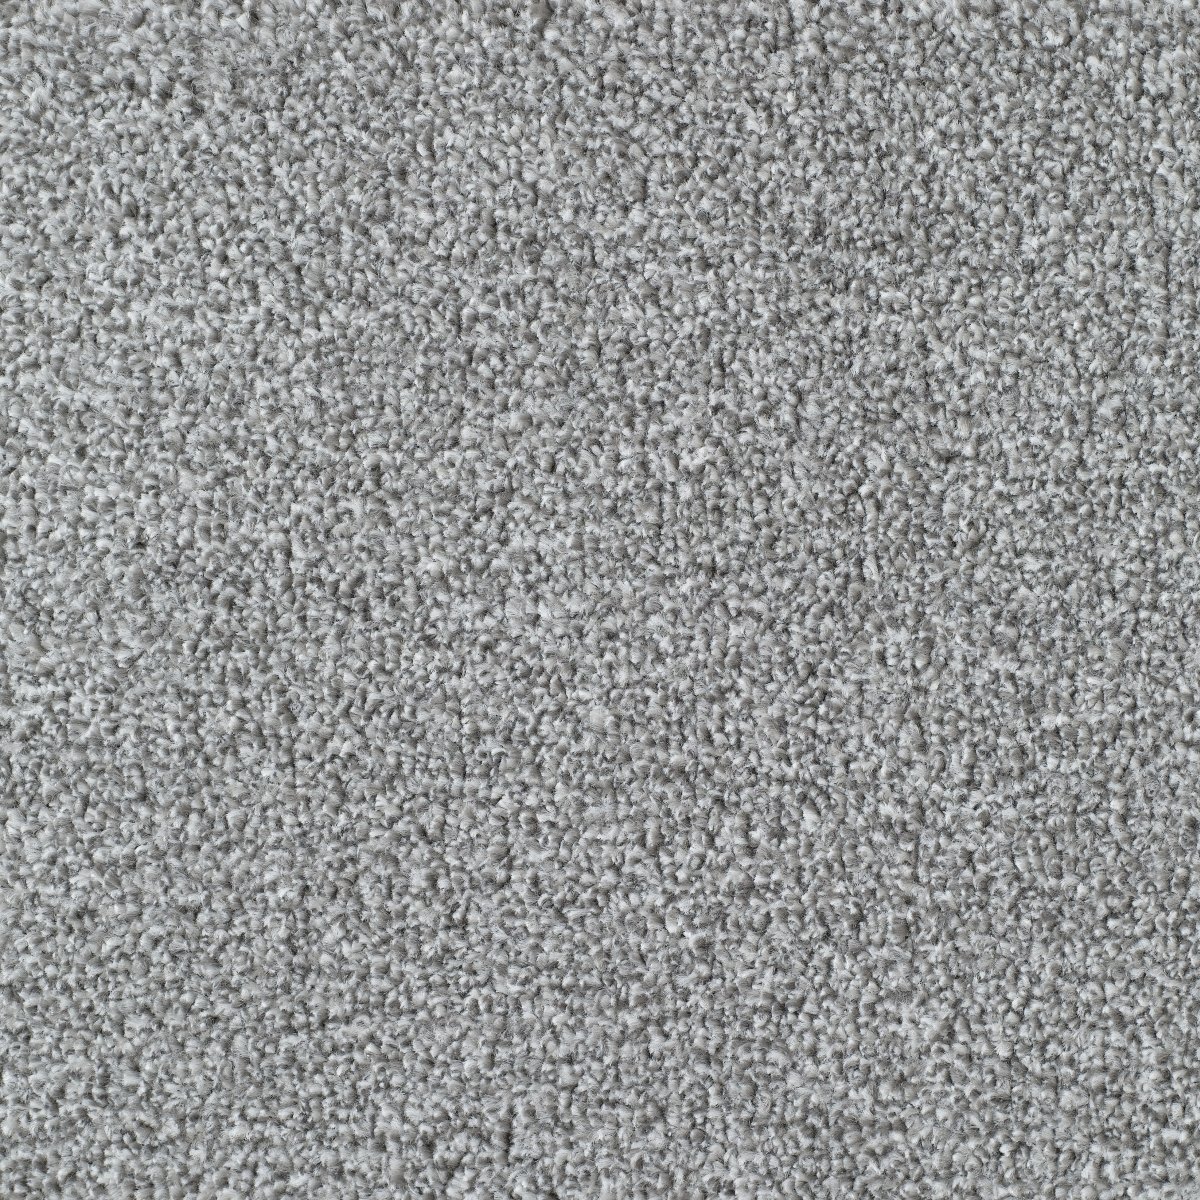 Seaton Valley Soft Deep Pile Saxony Carpet -  Light Grey